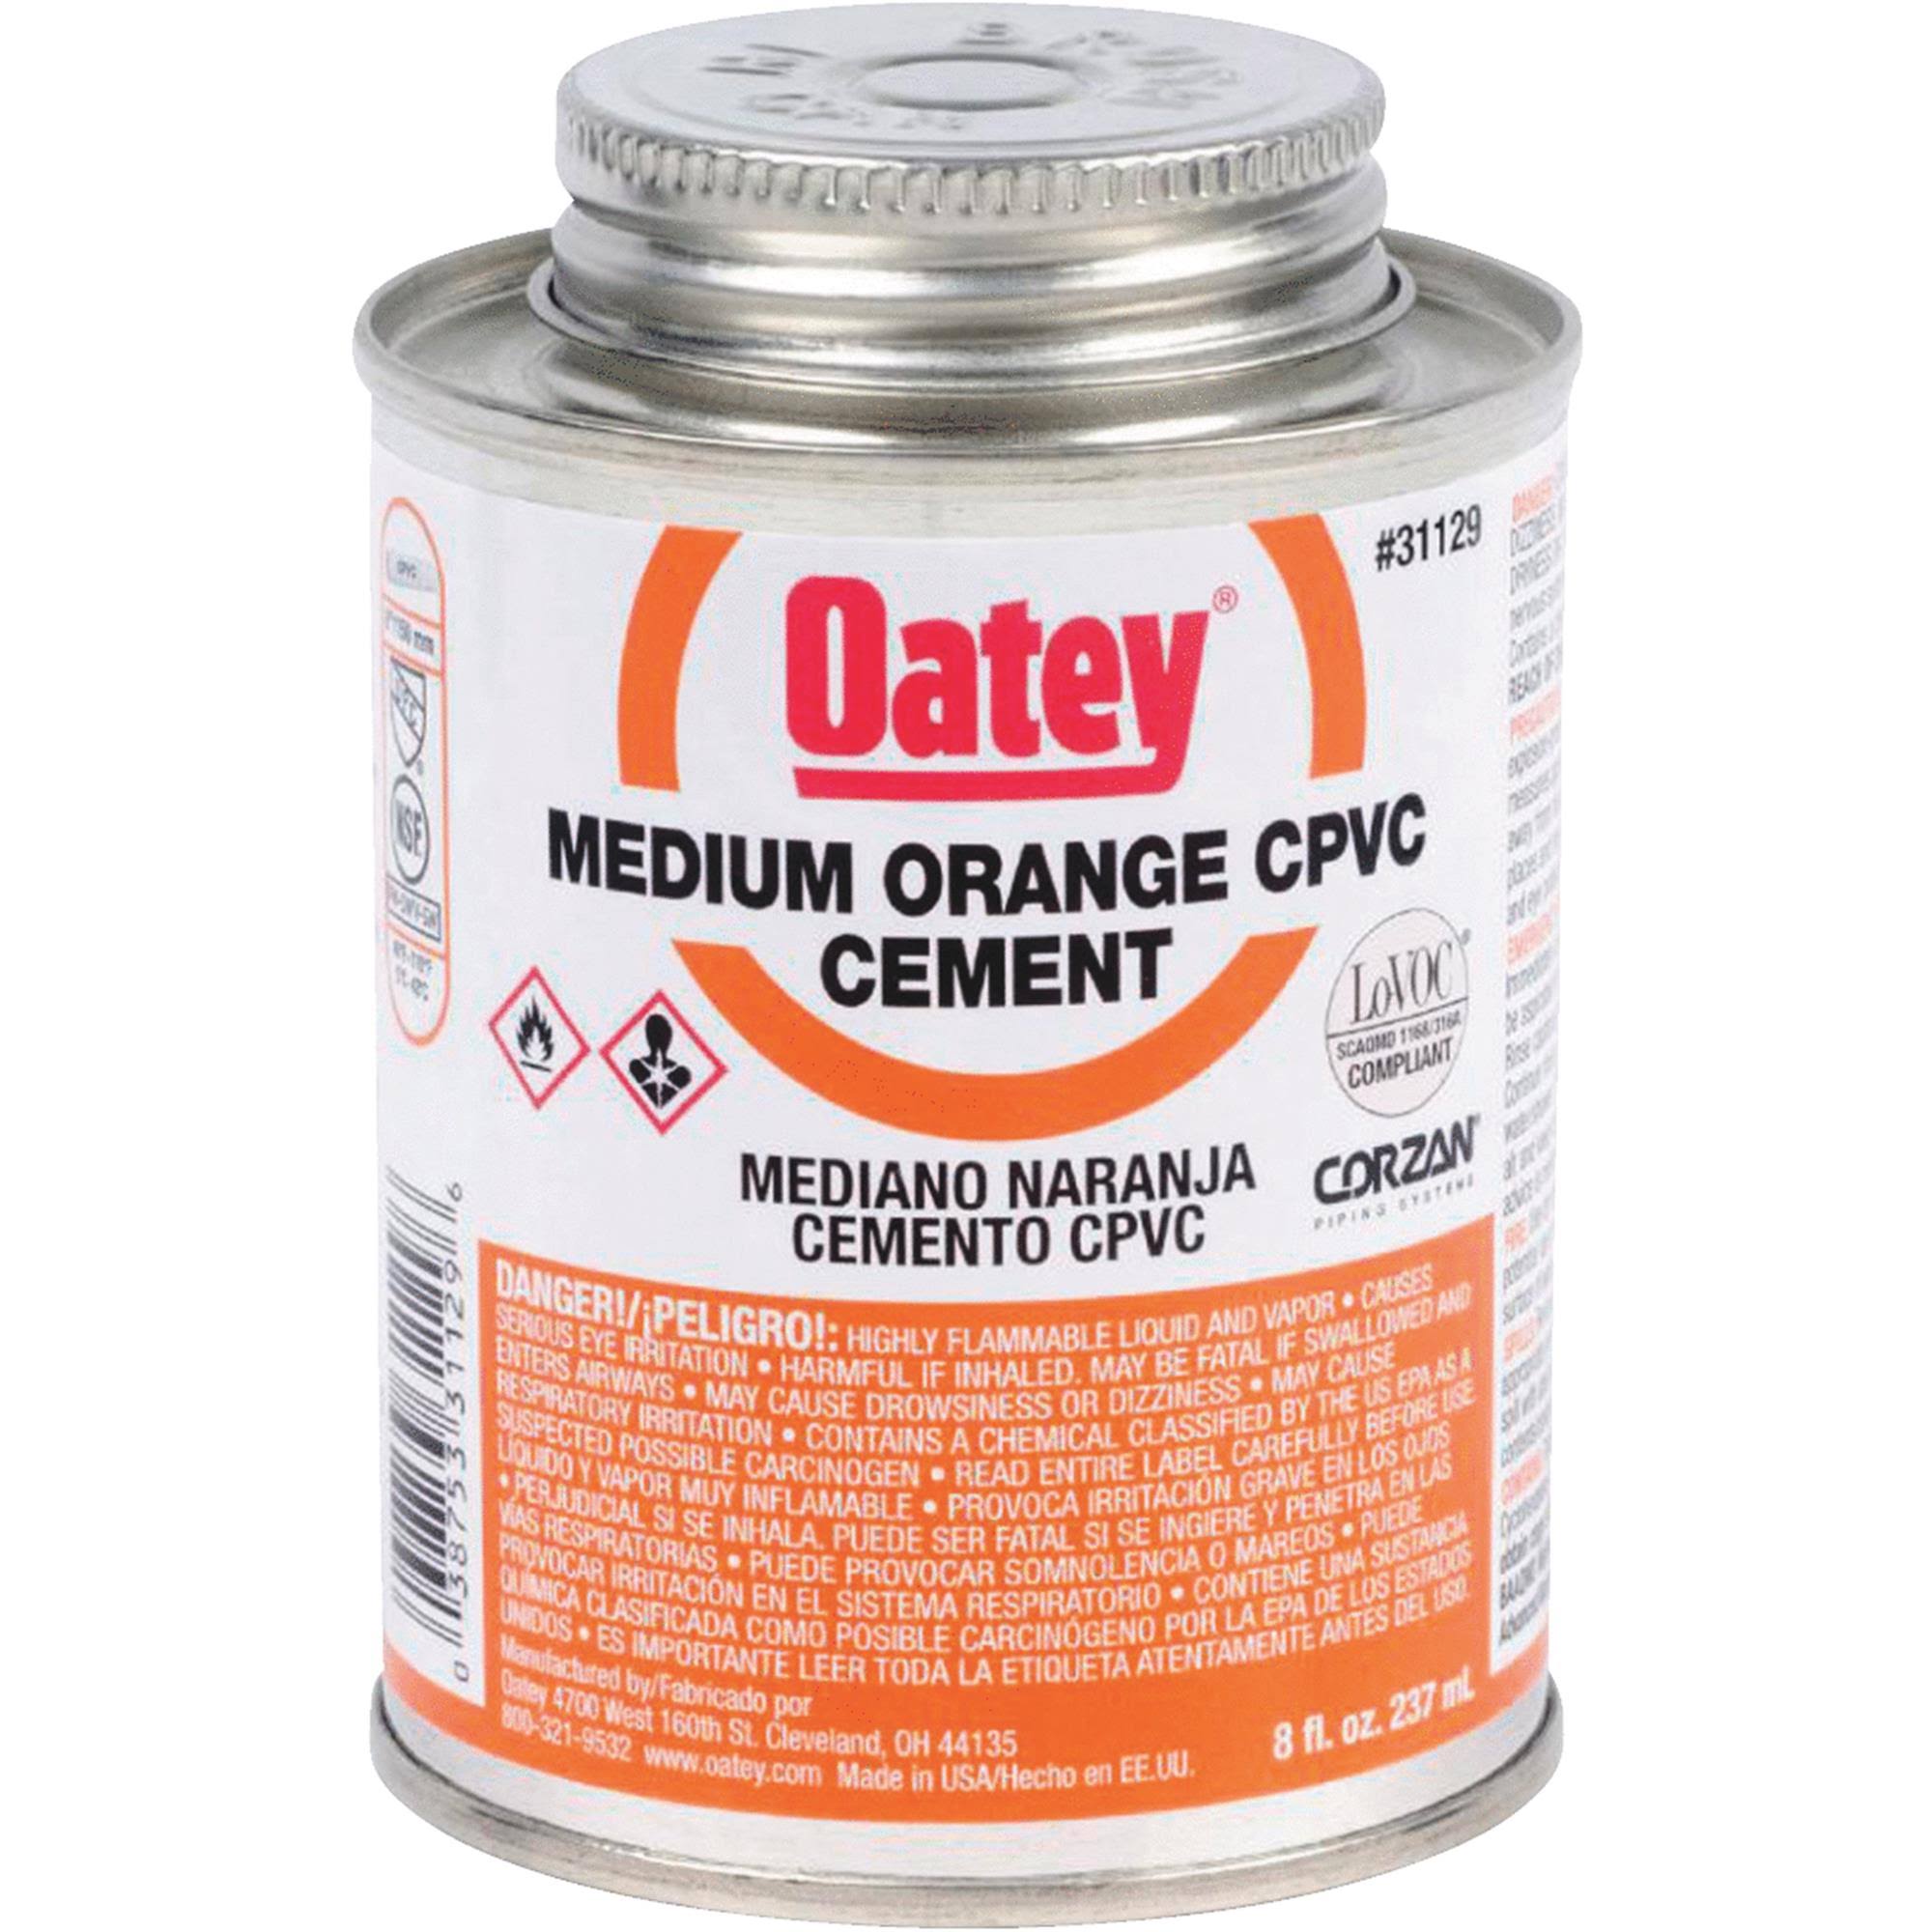 Oatey 31129 CPVC Cement - Medium Orange, 8oz